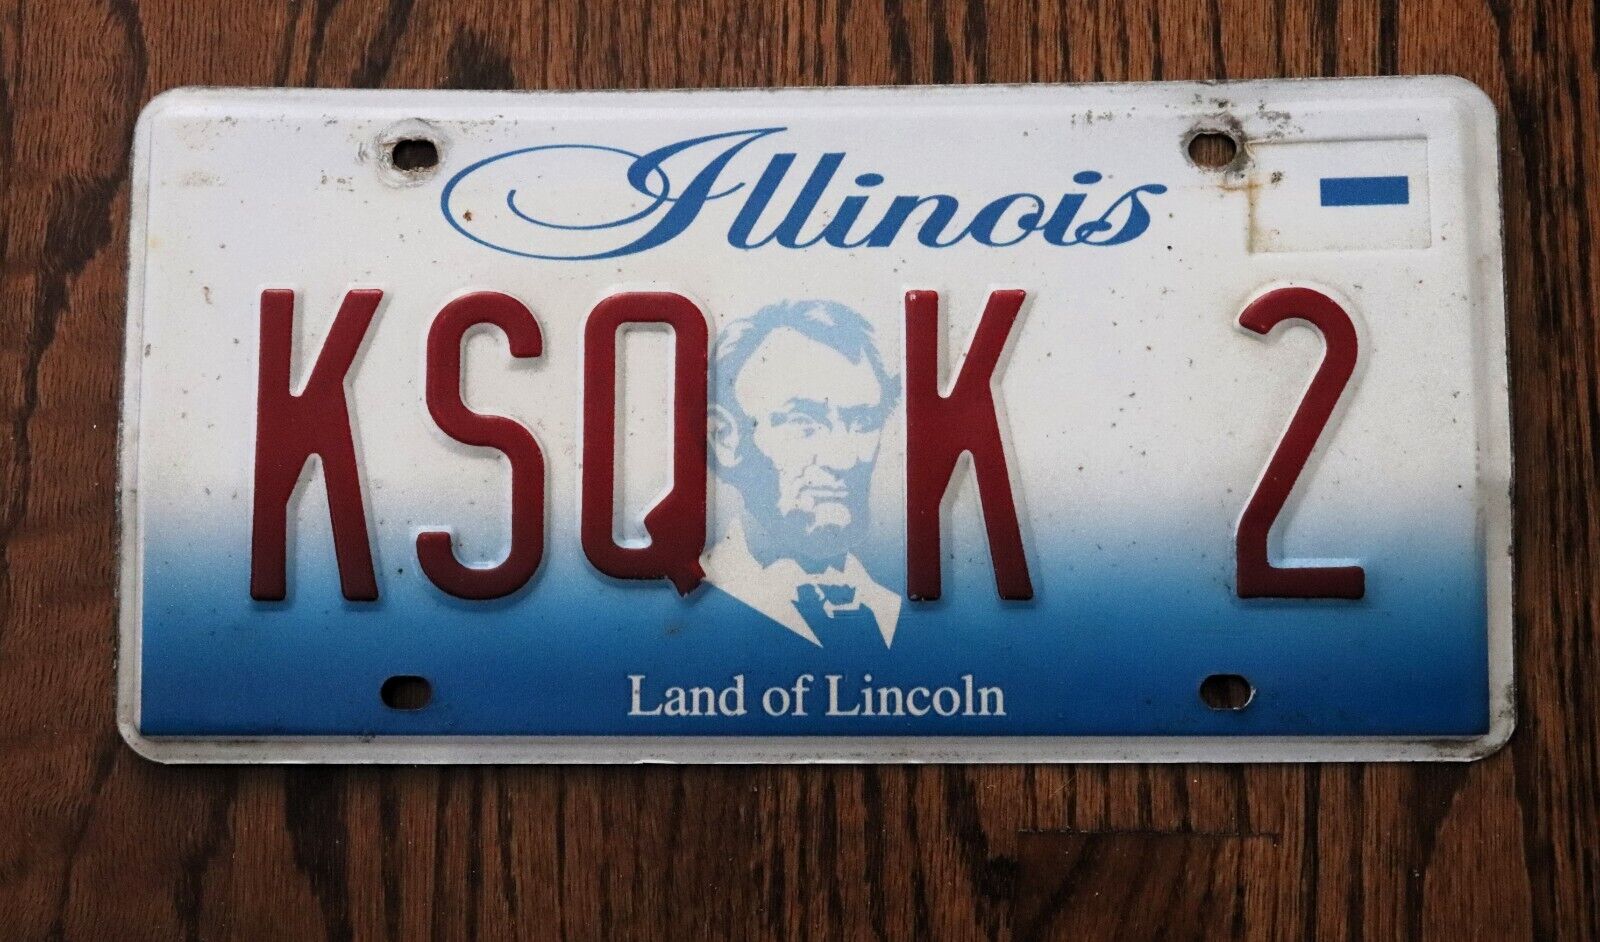 c 2001 ILLINOIS Land of Lincoln Collectible Auto Car License Plate KSQK2 KSQ K2